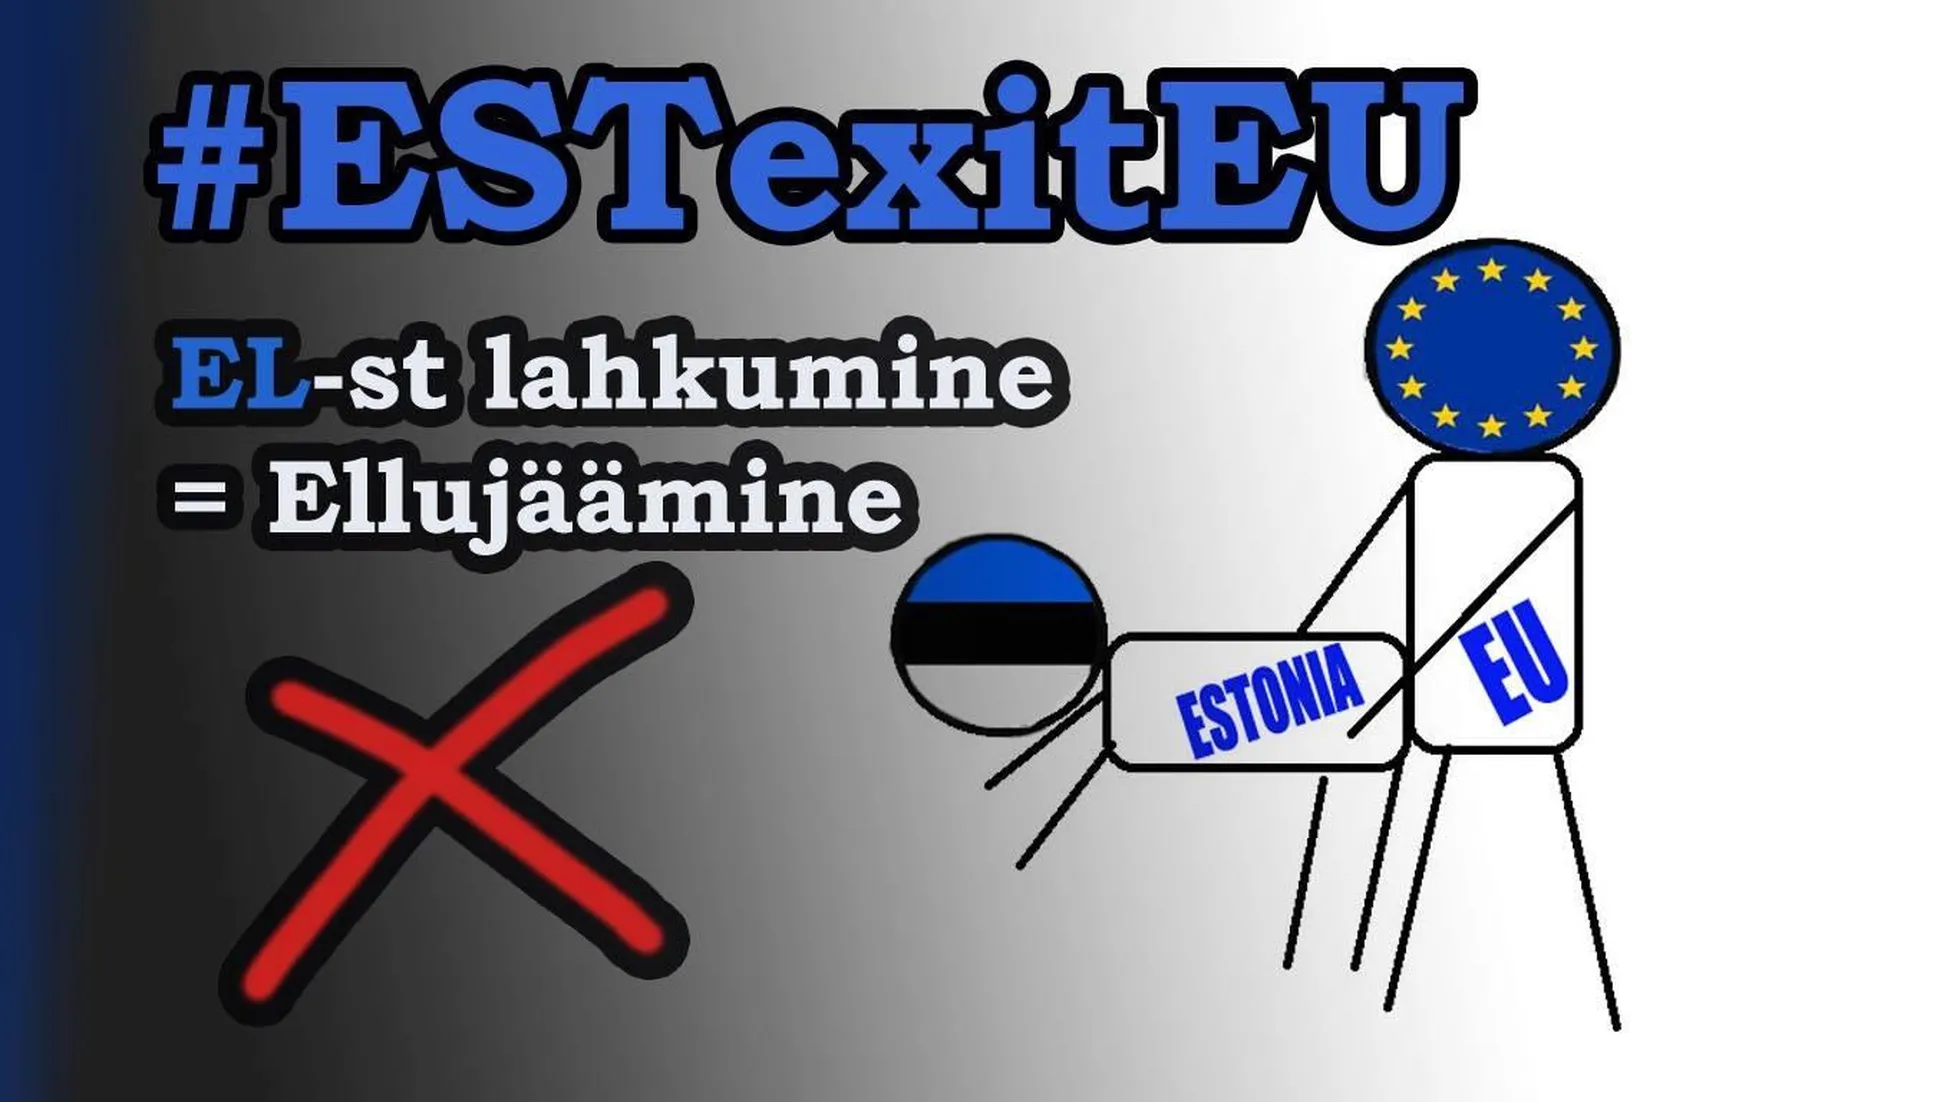 "Leaving the EU = survival" says a meme on Estoners' FB page.